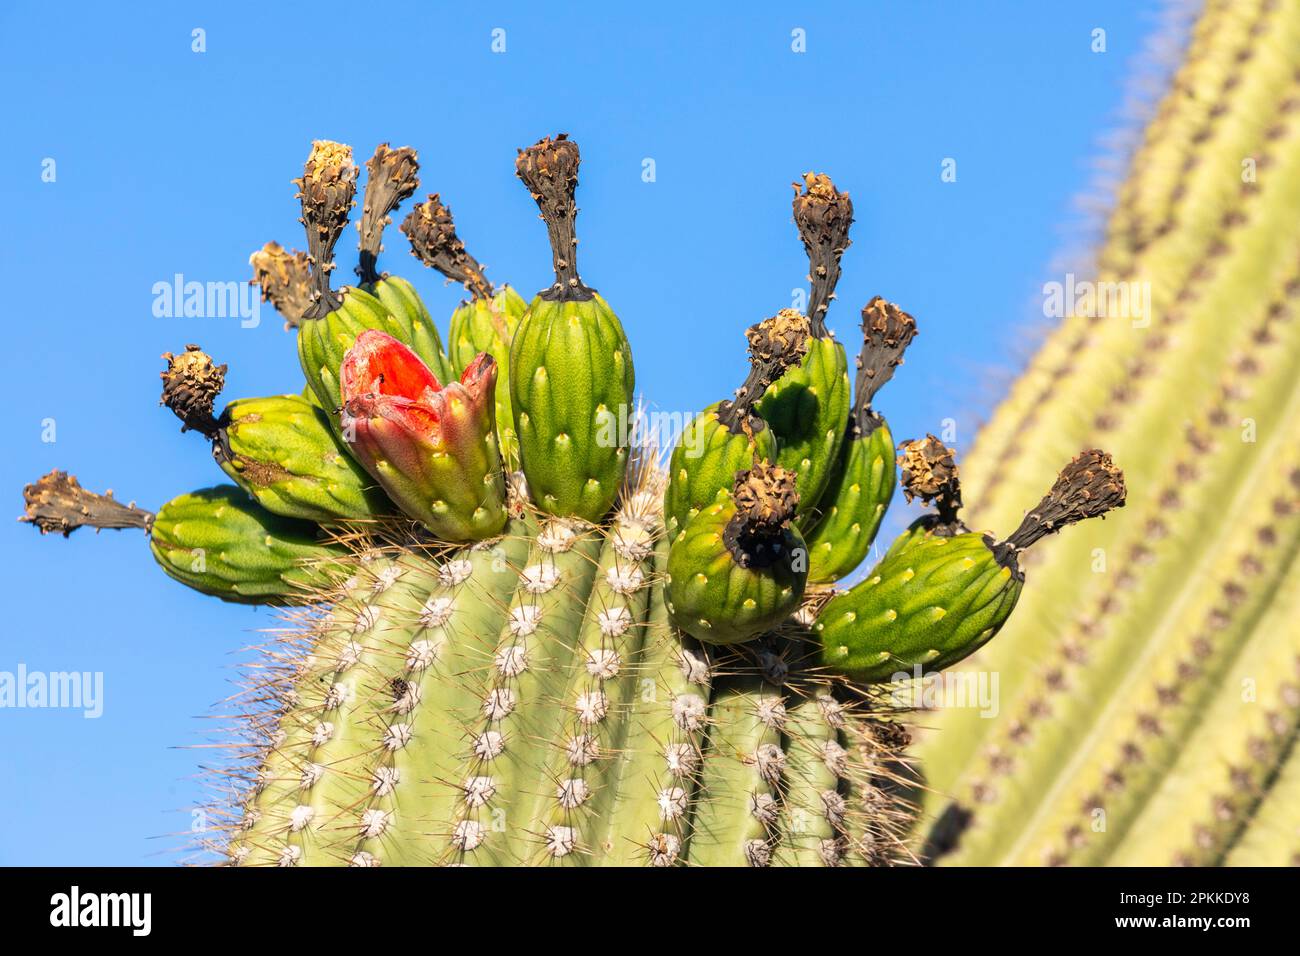 Fruiting saguaro cactus (Carnegiea gigantea), in Blüte im Juni, Sweetwater Preserve, Tucson, Arizona, Vereinigte Staaten von Amerika, Nordamerika Stockfoto